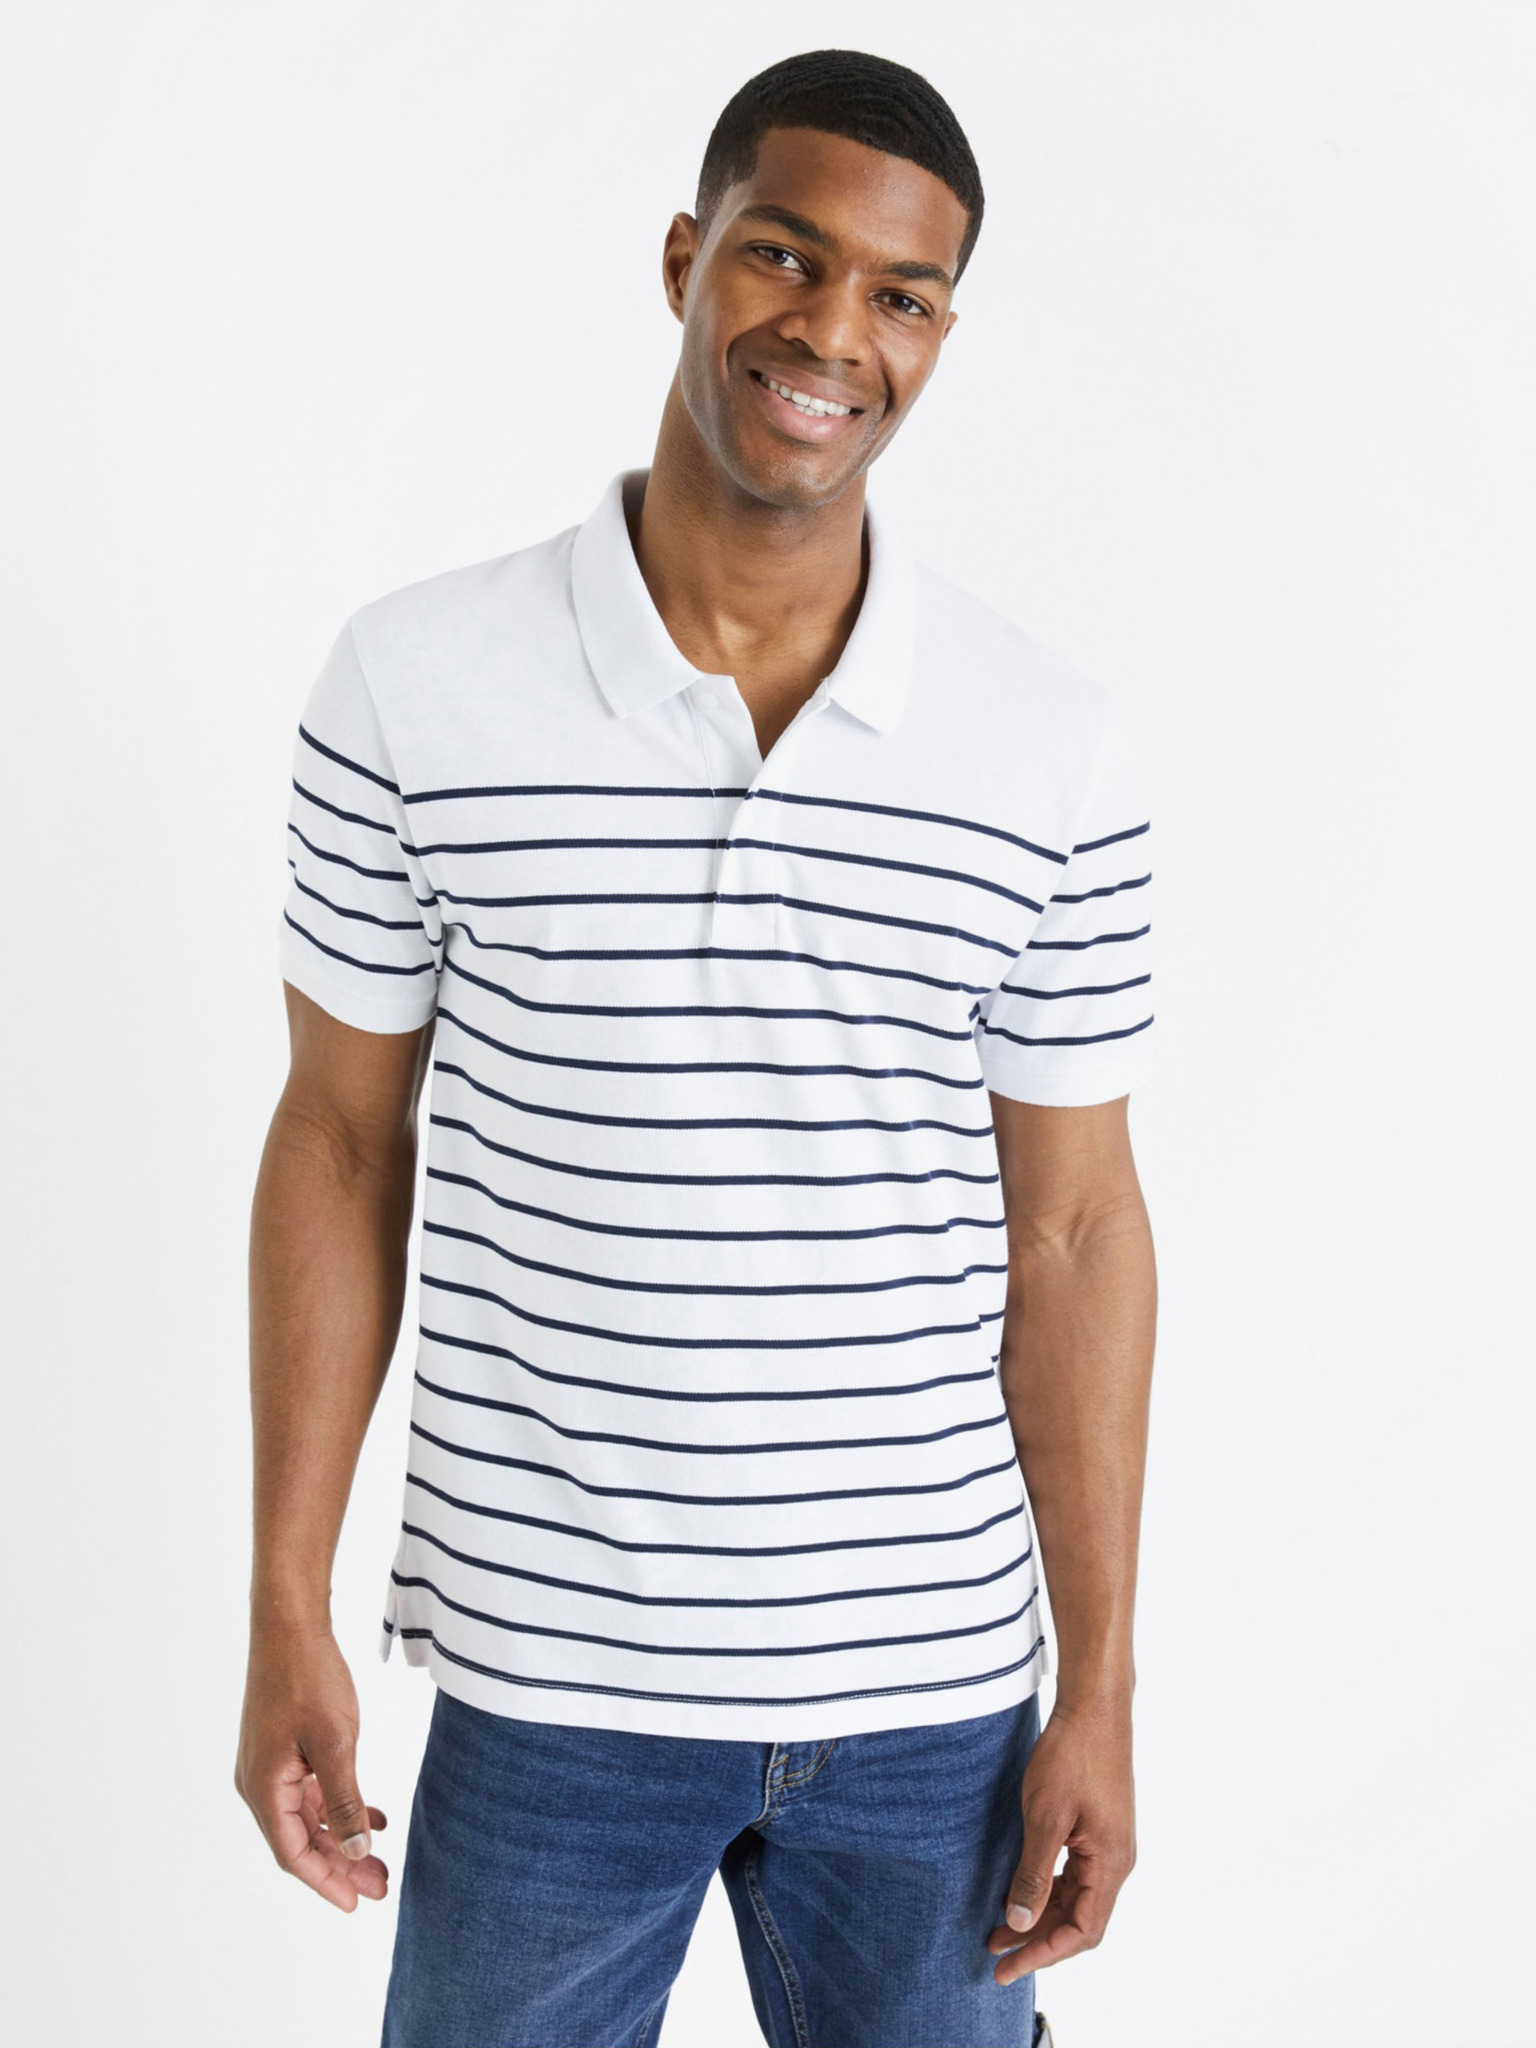 Celio - Buy Men's T-shirts, Shirts, Trousers online